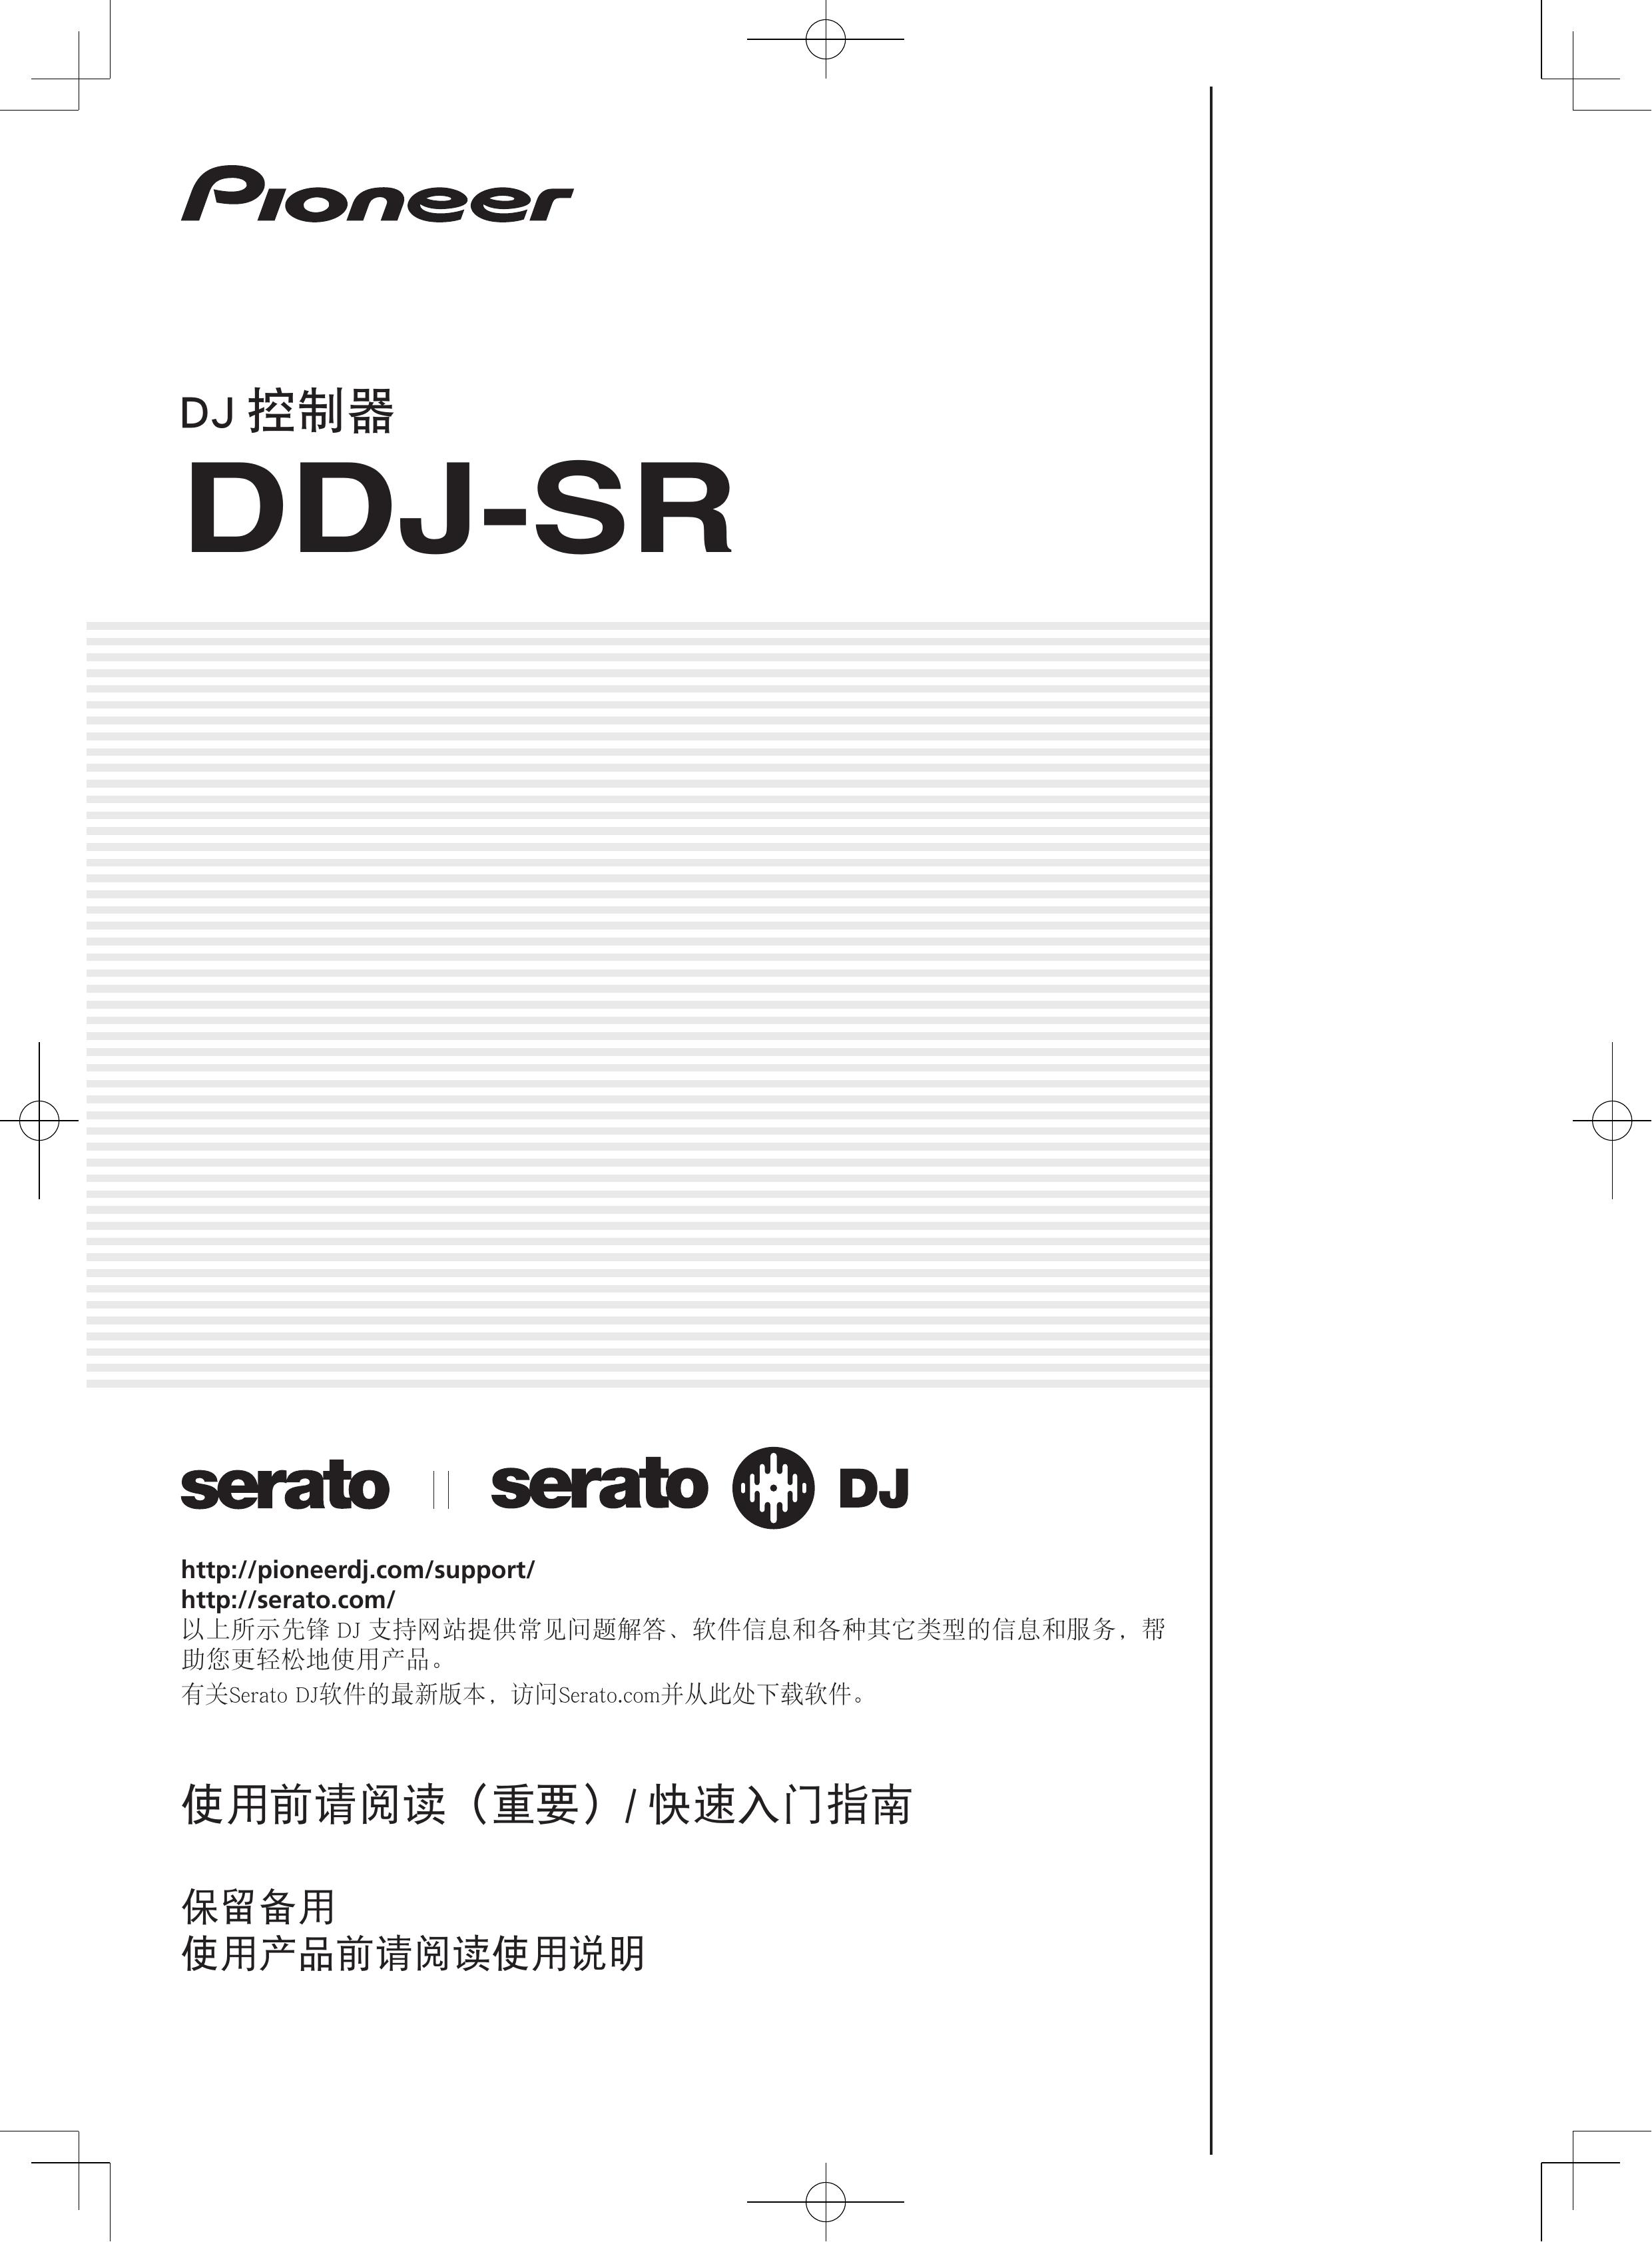 Pioneer DDJ-SR DJ Equipment User Manual